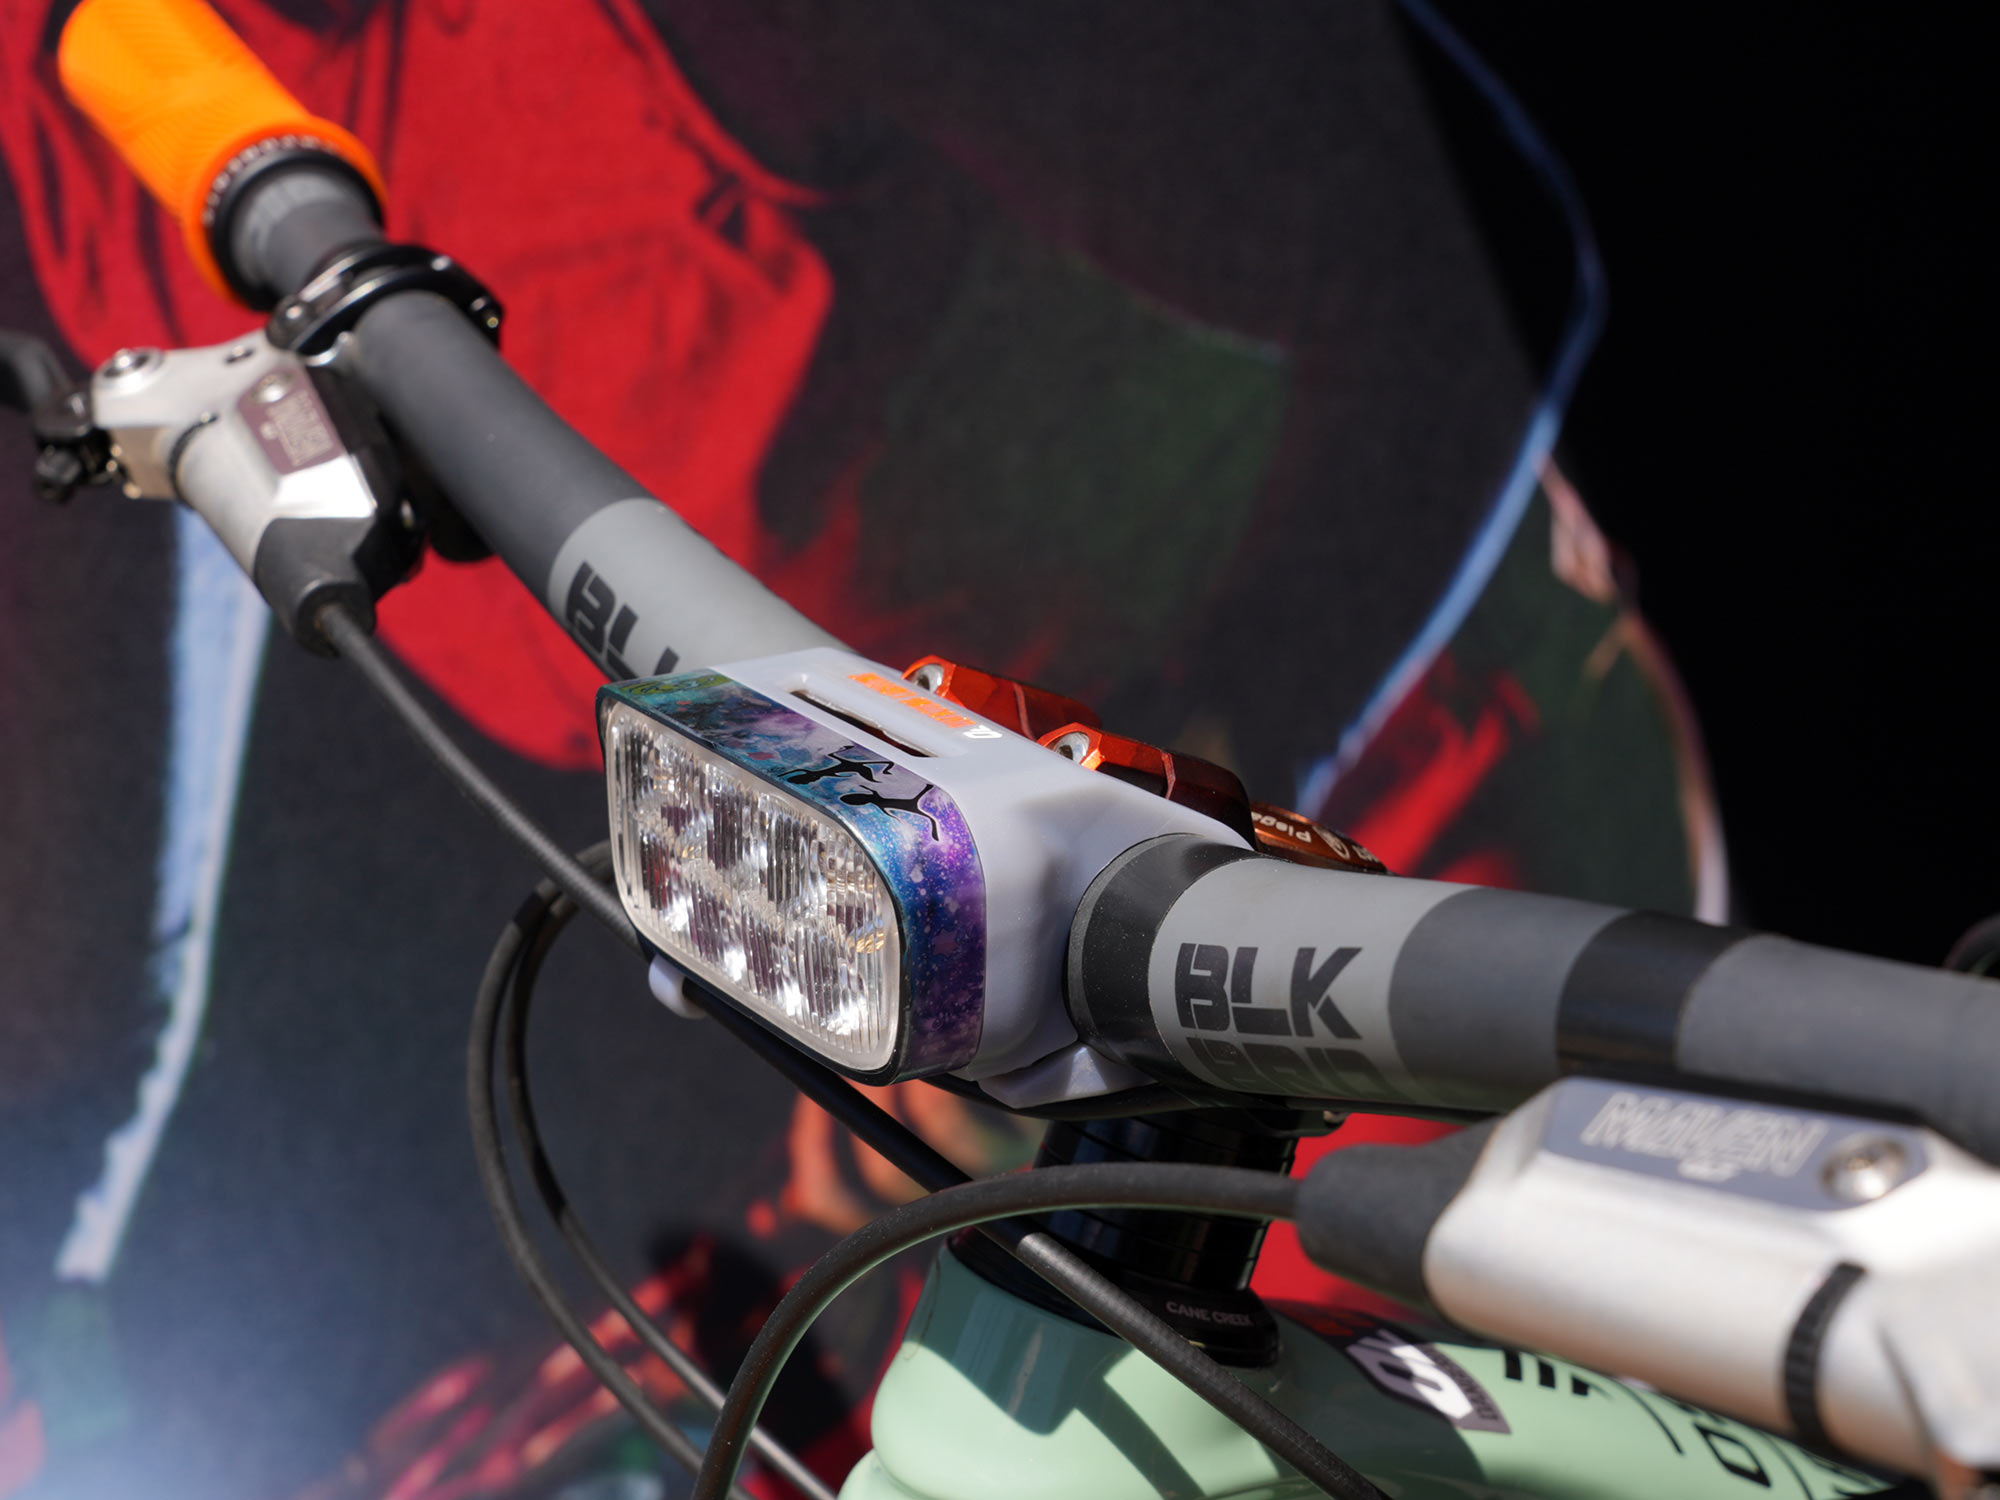 prototype e-bike headlight molded around stem faceplate